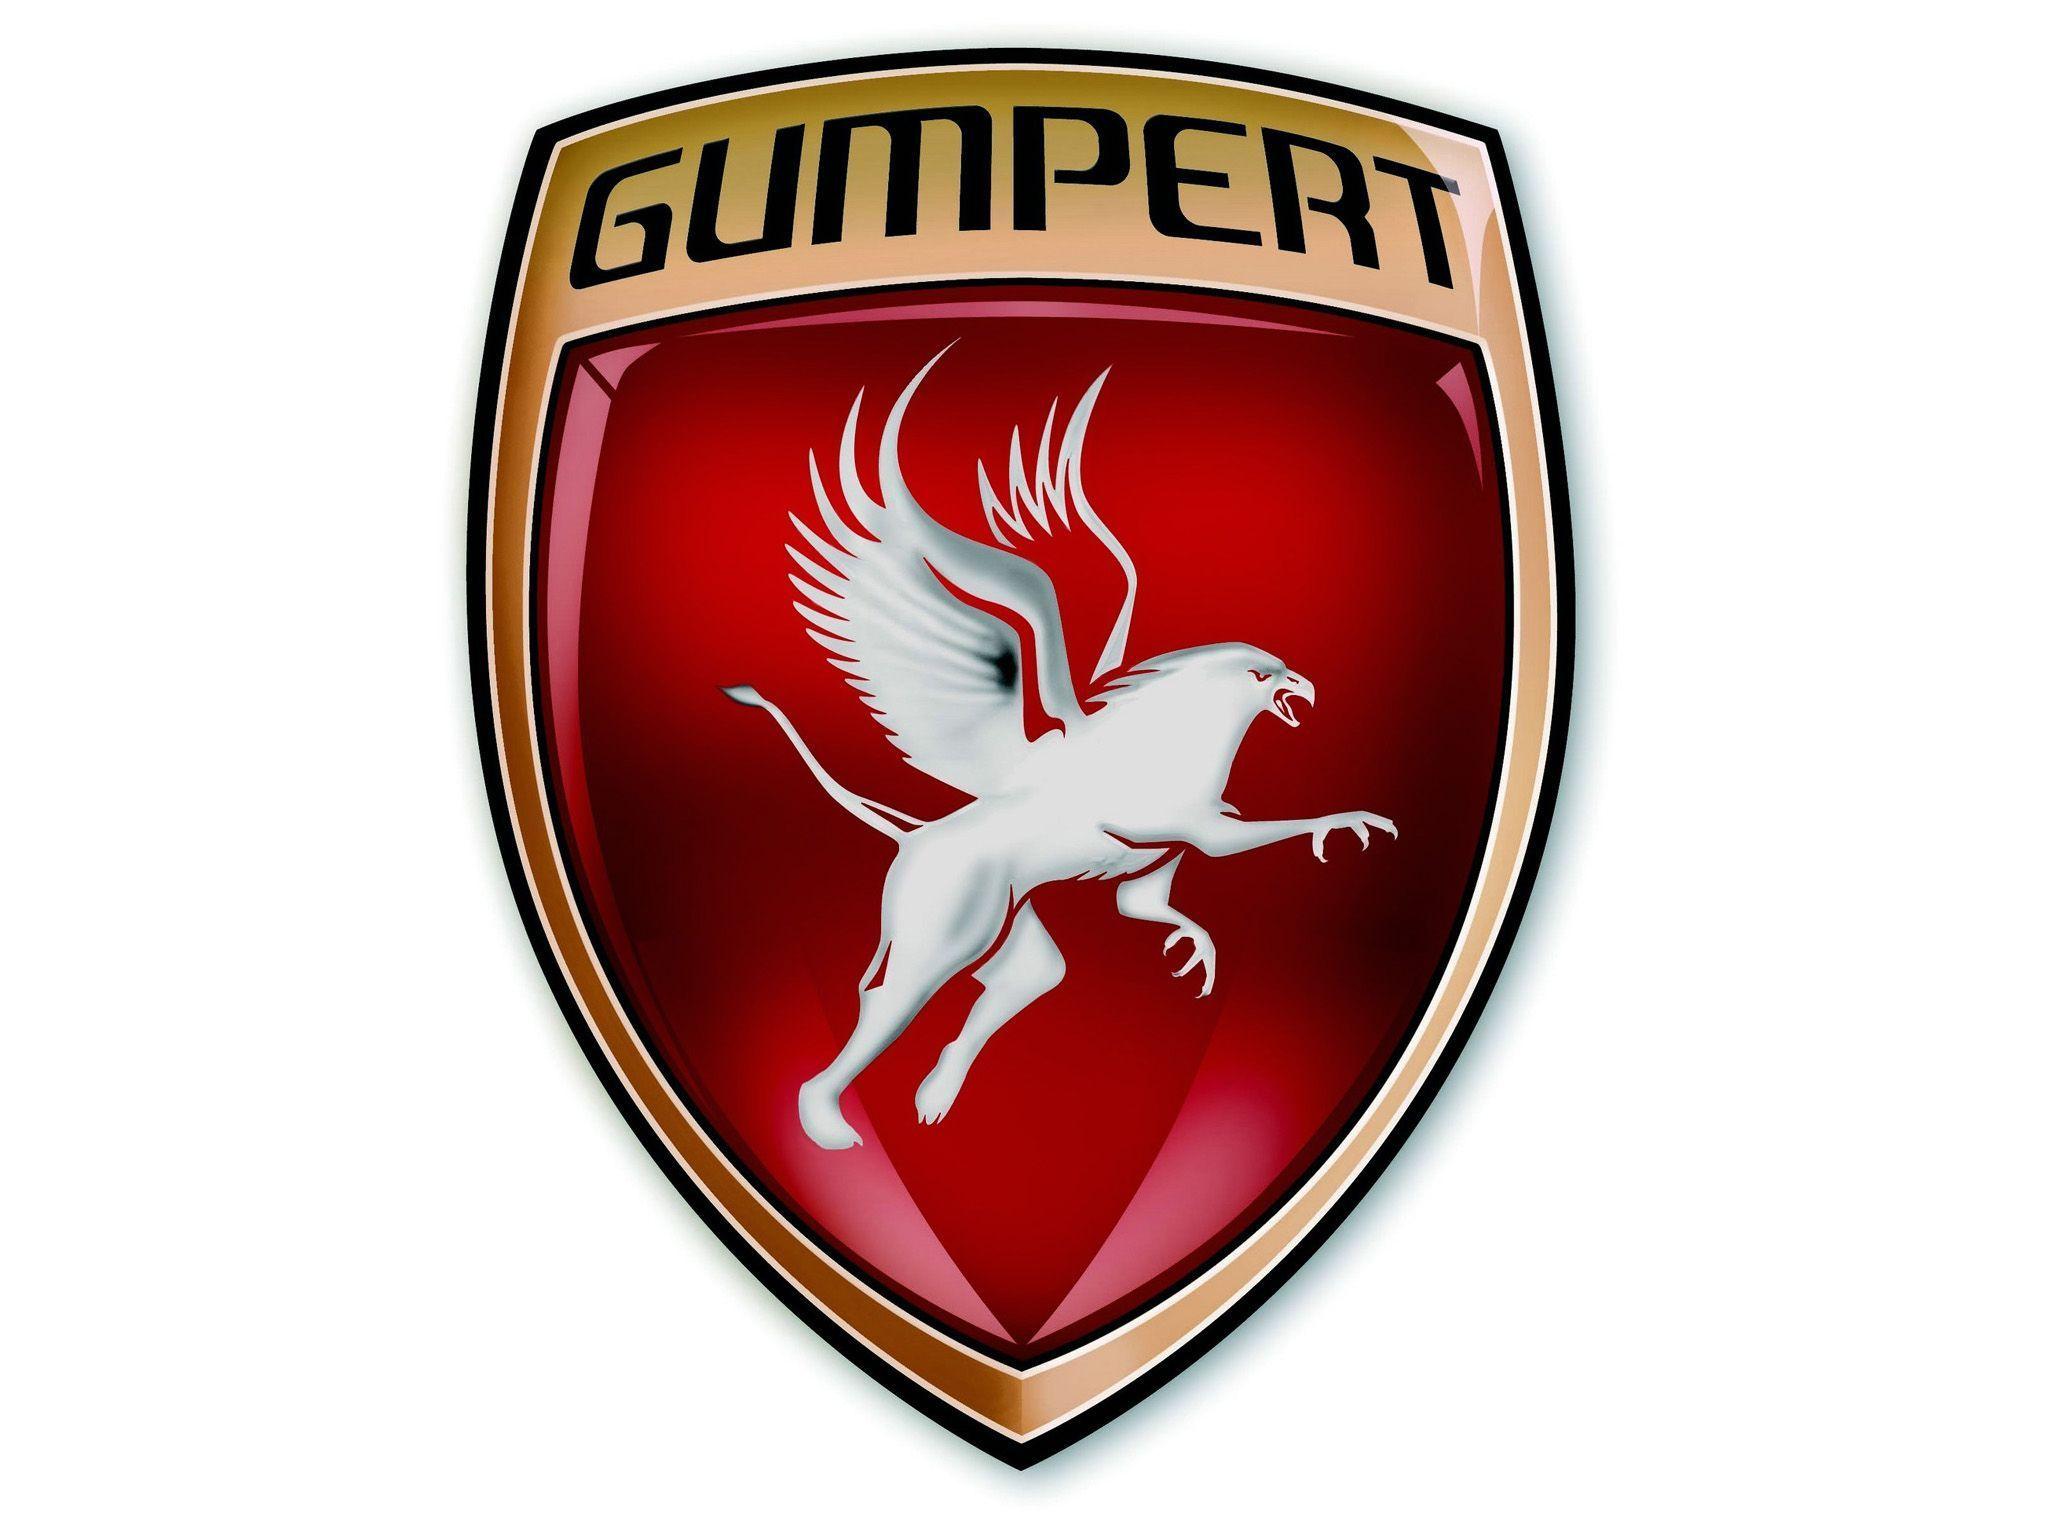 A F in Shield Car Logo - Gumpert logo. Cars. Car logos, Logos, Cars